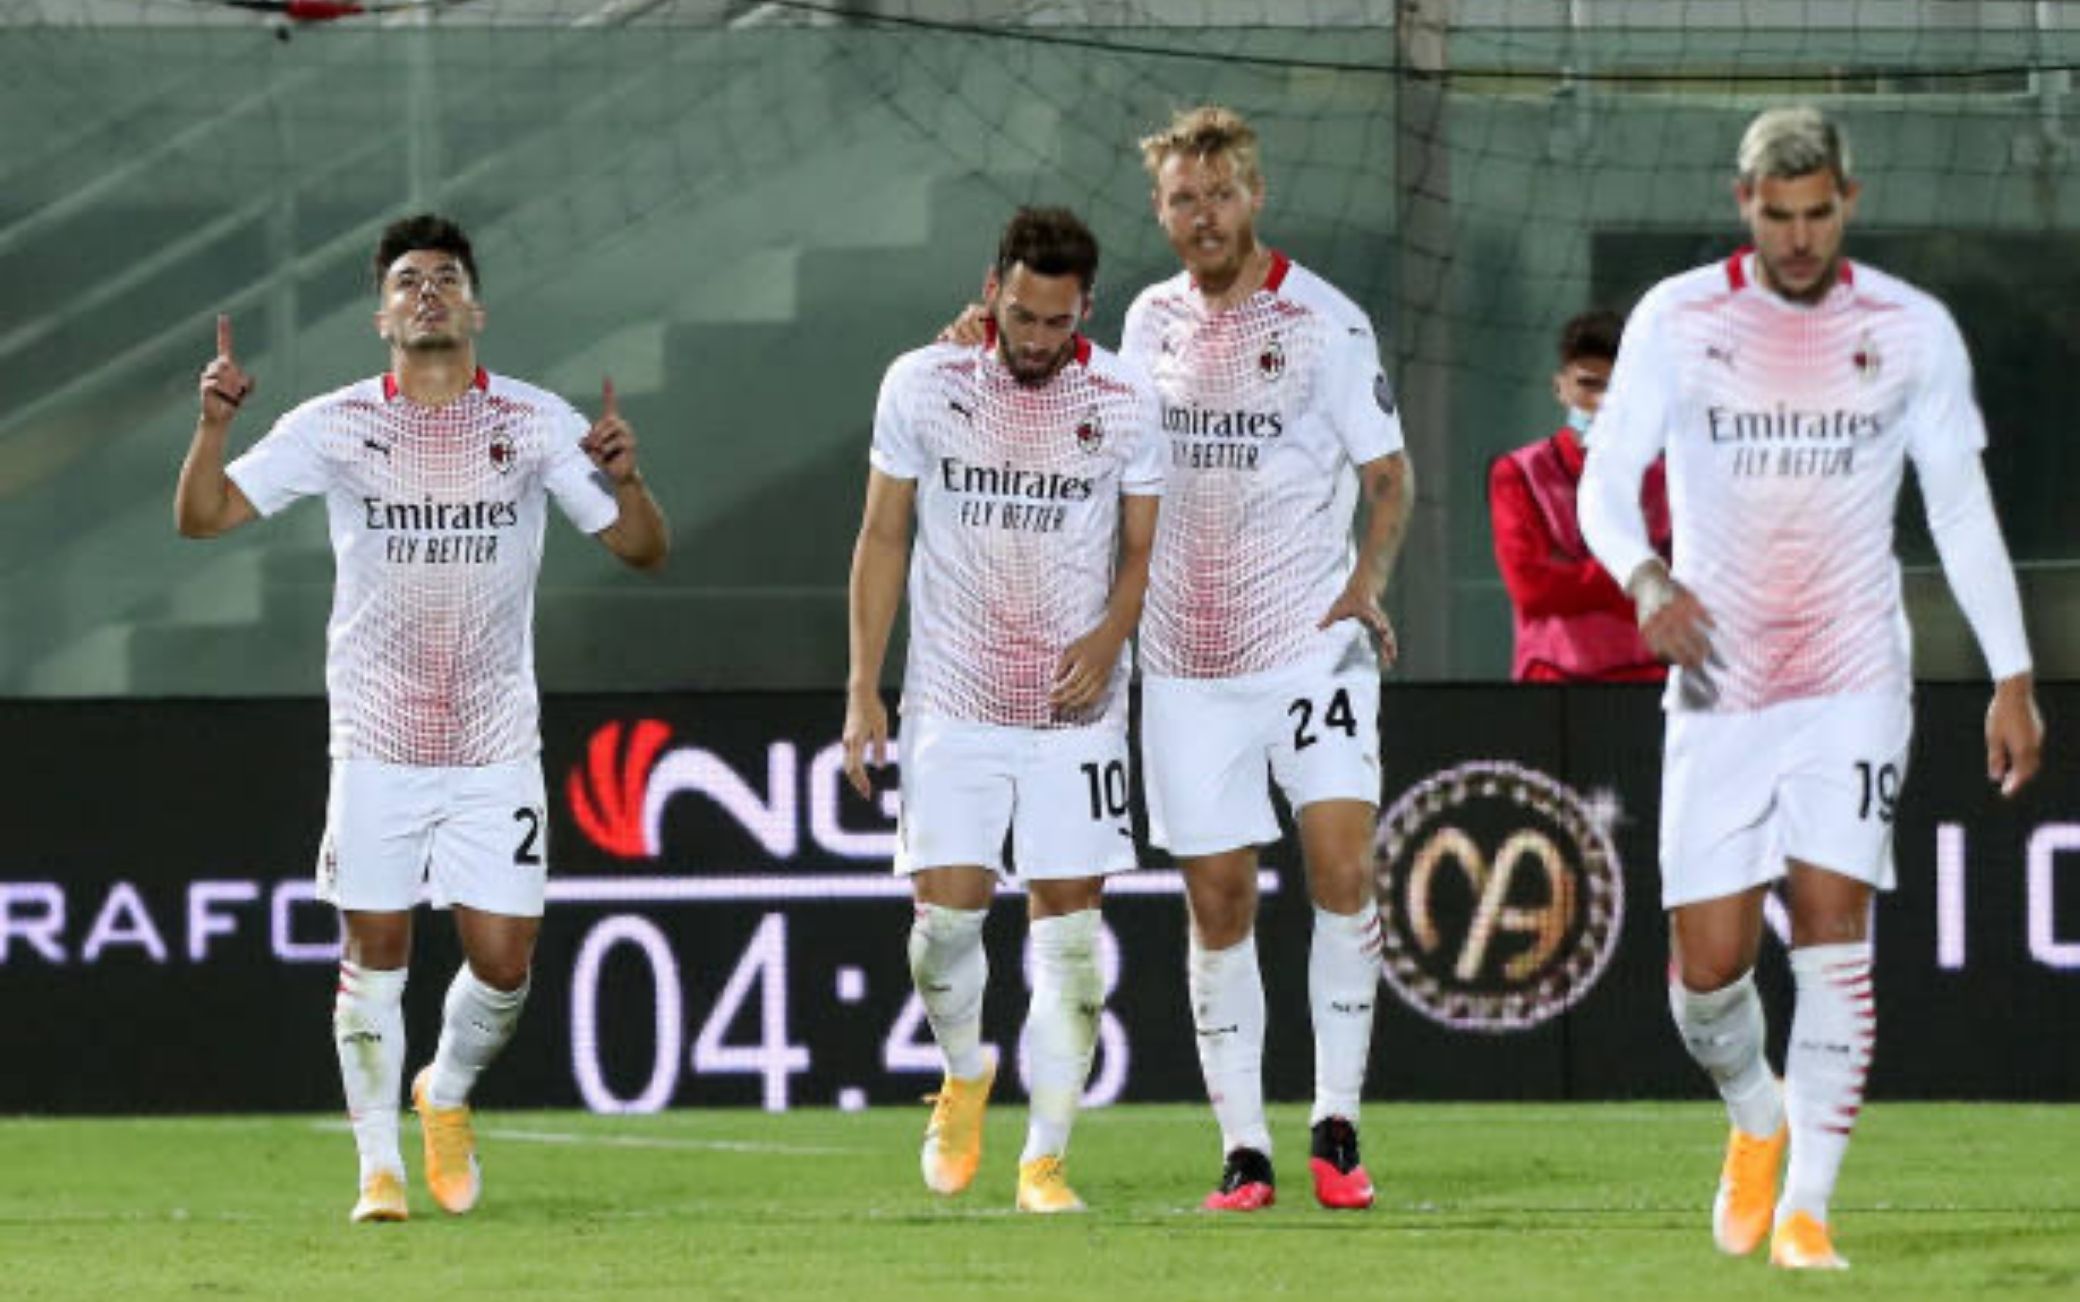 Crotone 0 – Milan 2